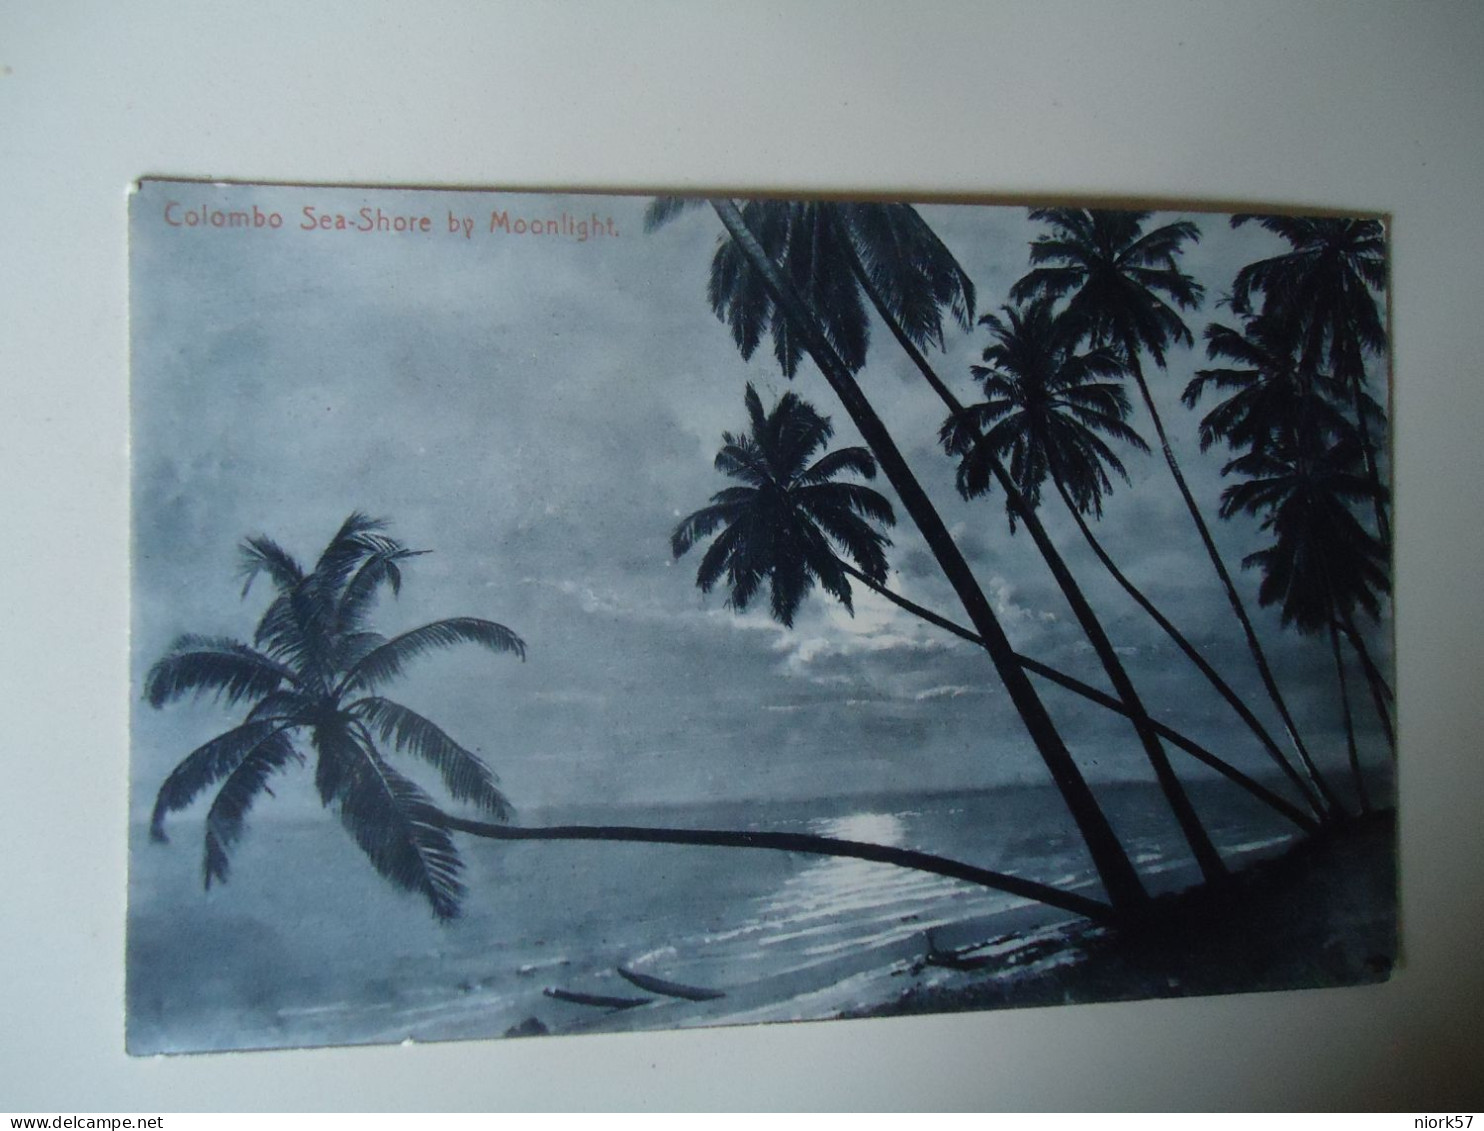 CEYLON  SRI LANCA COLOMBO SEA-SHORE BY MOONLIGHT  POSTCARDS  MONUMENTS  MORE  PURHASES 10% DISCOUNT - Sri Lanka (Ceylon)